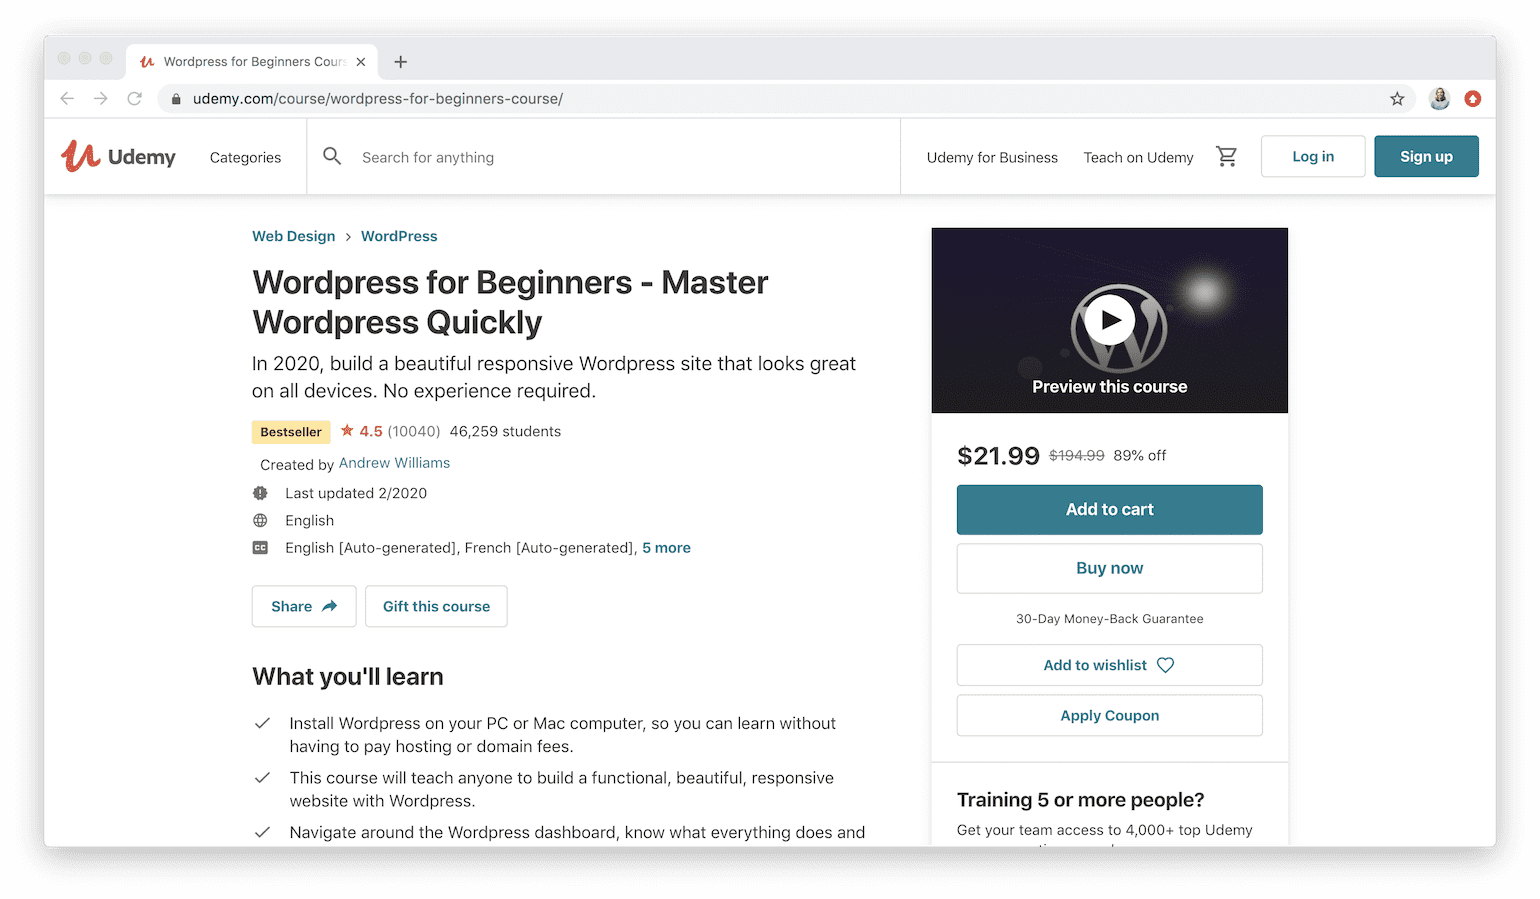 WordPress for Beginners - Master WordPress Quickly on Udemy